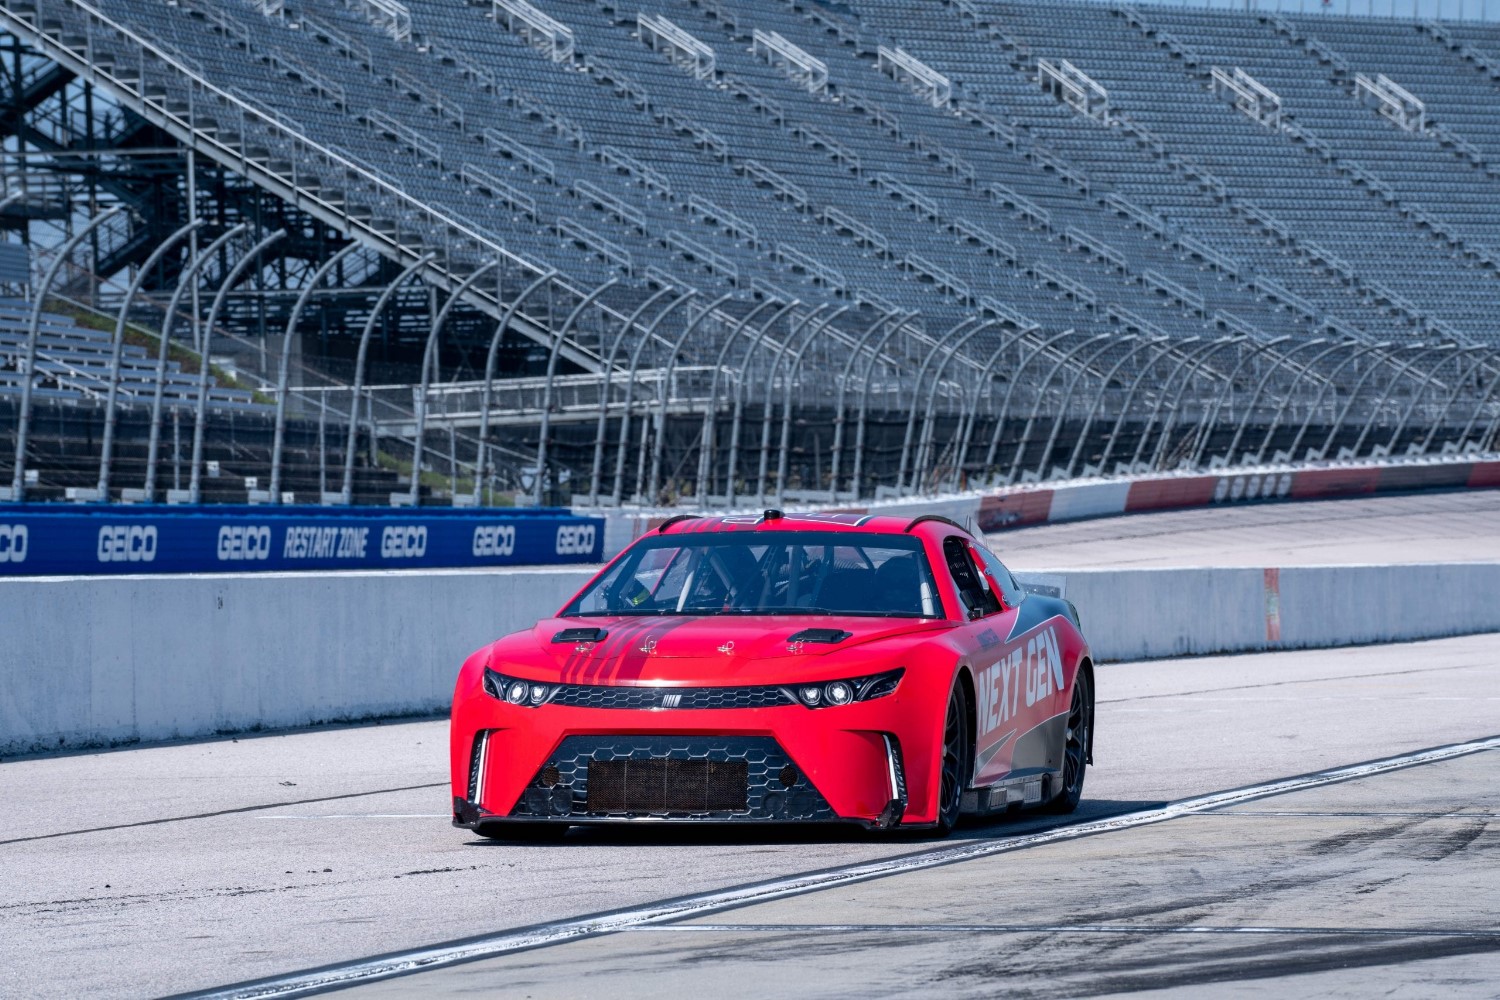 NASCAR Watch live testing of 2022 Next-Gen Car